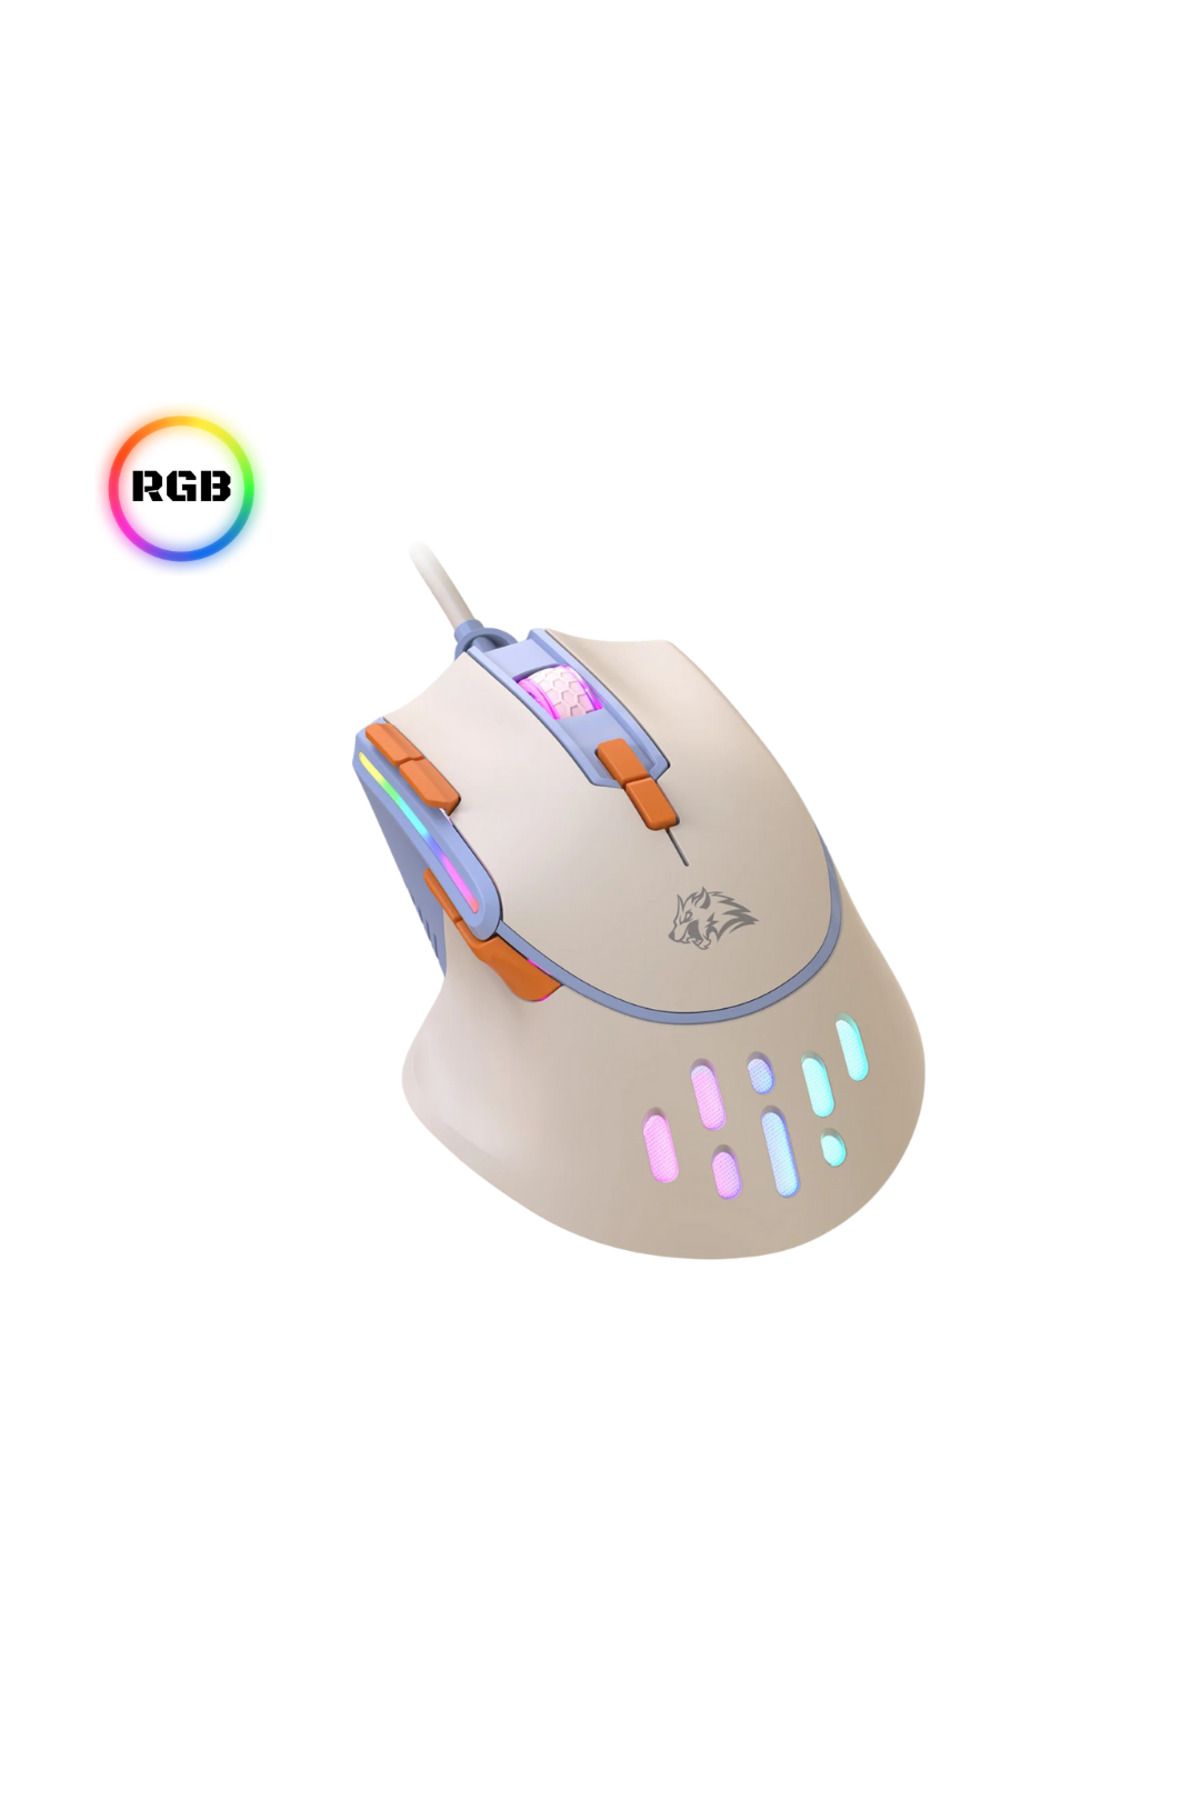 ZIYOULANG M2 Kablolu Espor Oyuncu Mouse RGB 12800 DPI Ledli Gaming Mouse Software 9 Makro Sensor